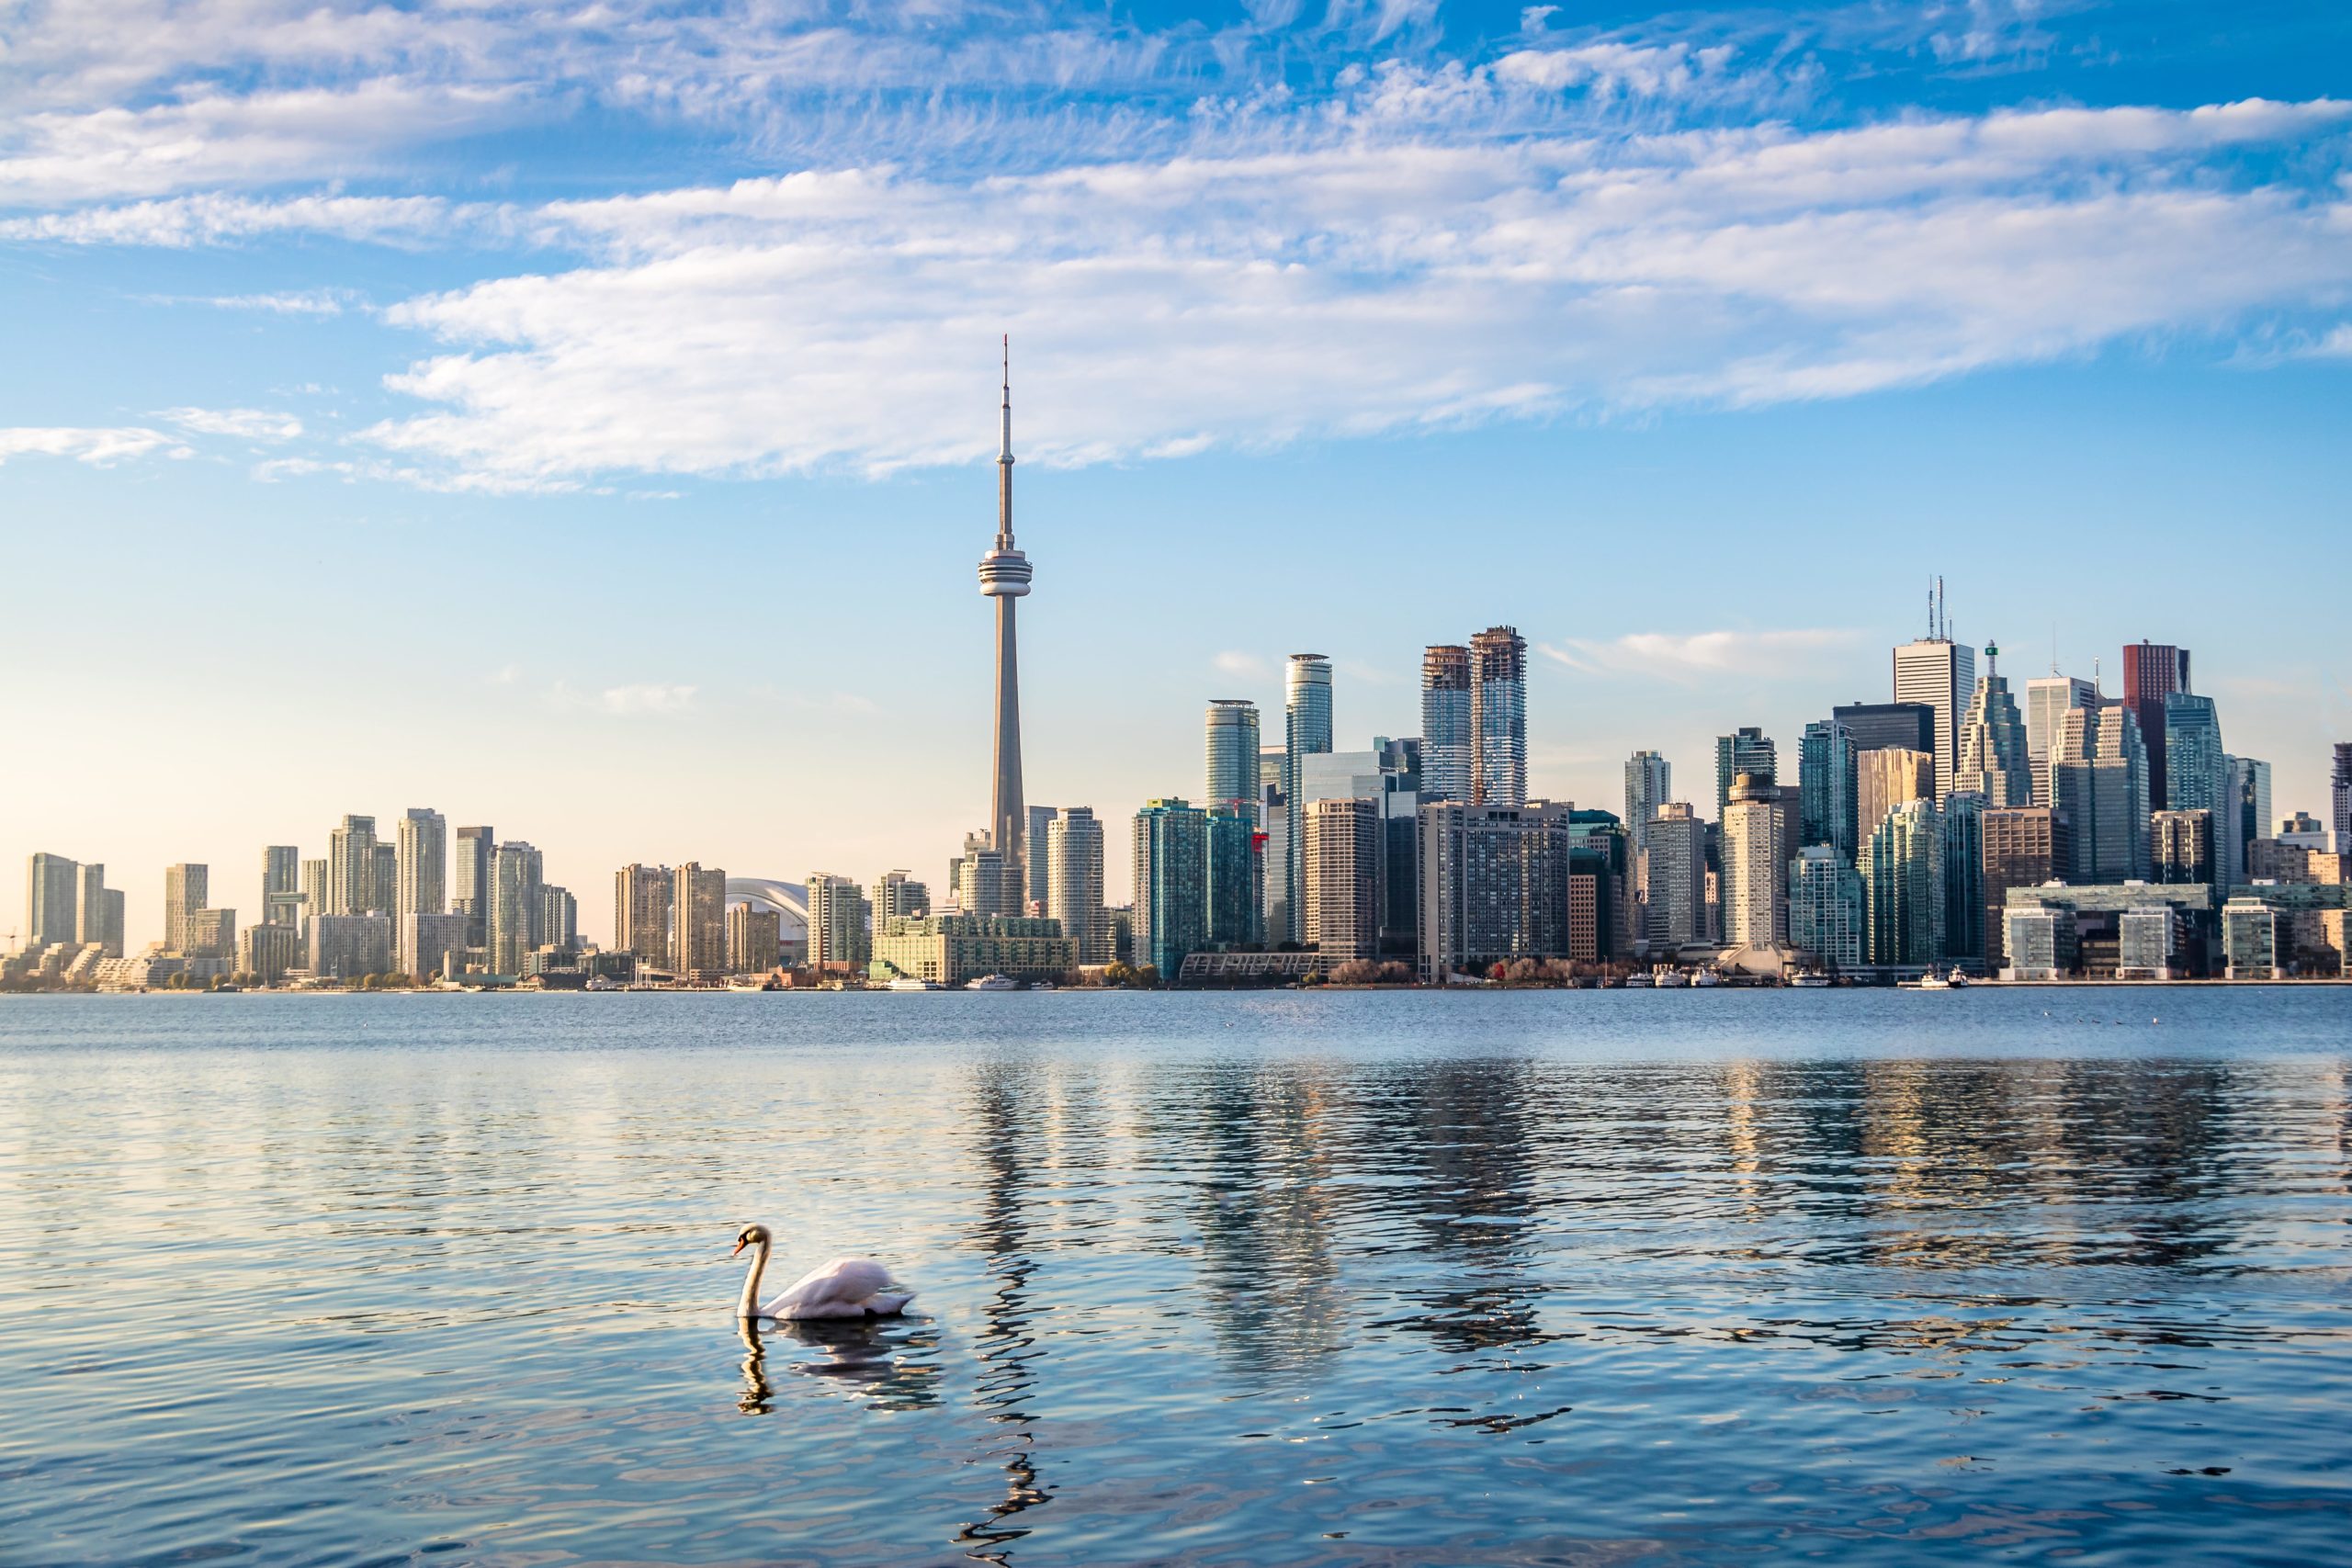 Toronto Skyline And Swan Swimming On Ontario Lake 2022 03 05 22 49 45 Utc Min